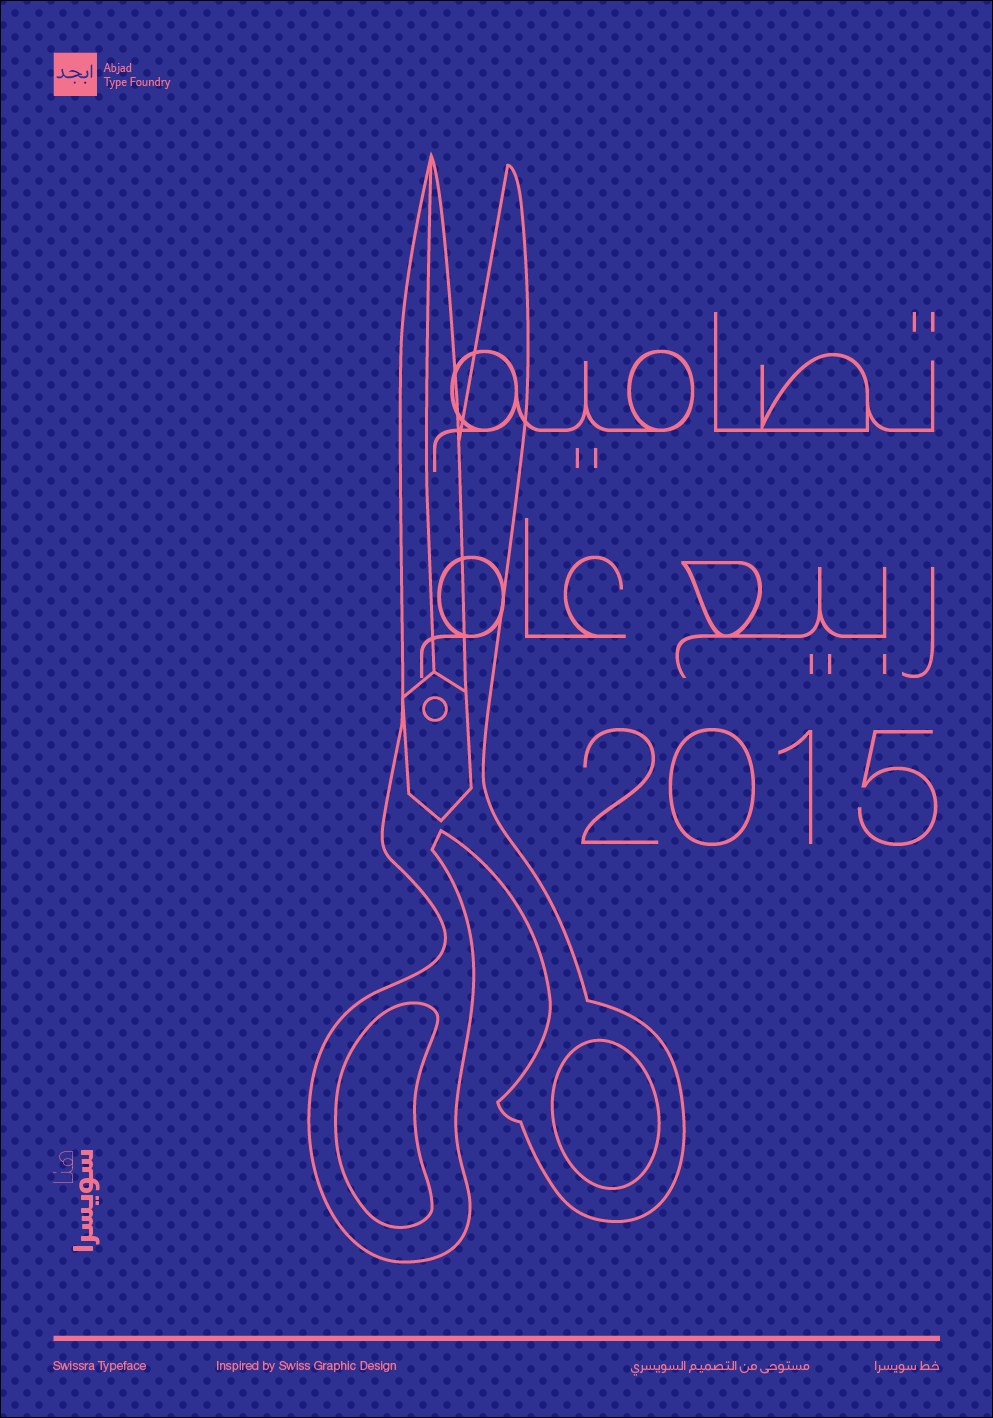 arabic font swiss minimal helvetica swiss design poster Typeface swissra arabic_font